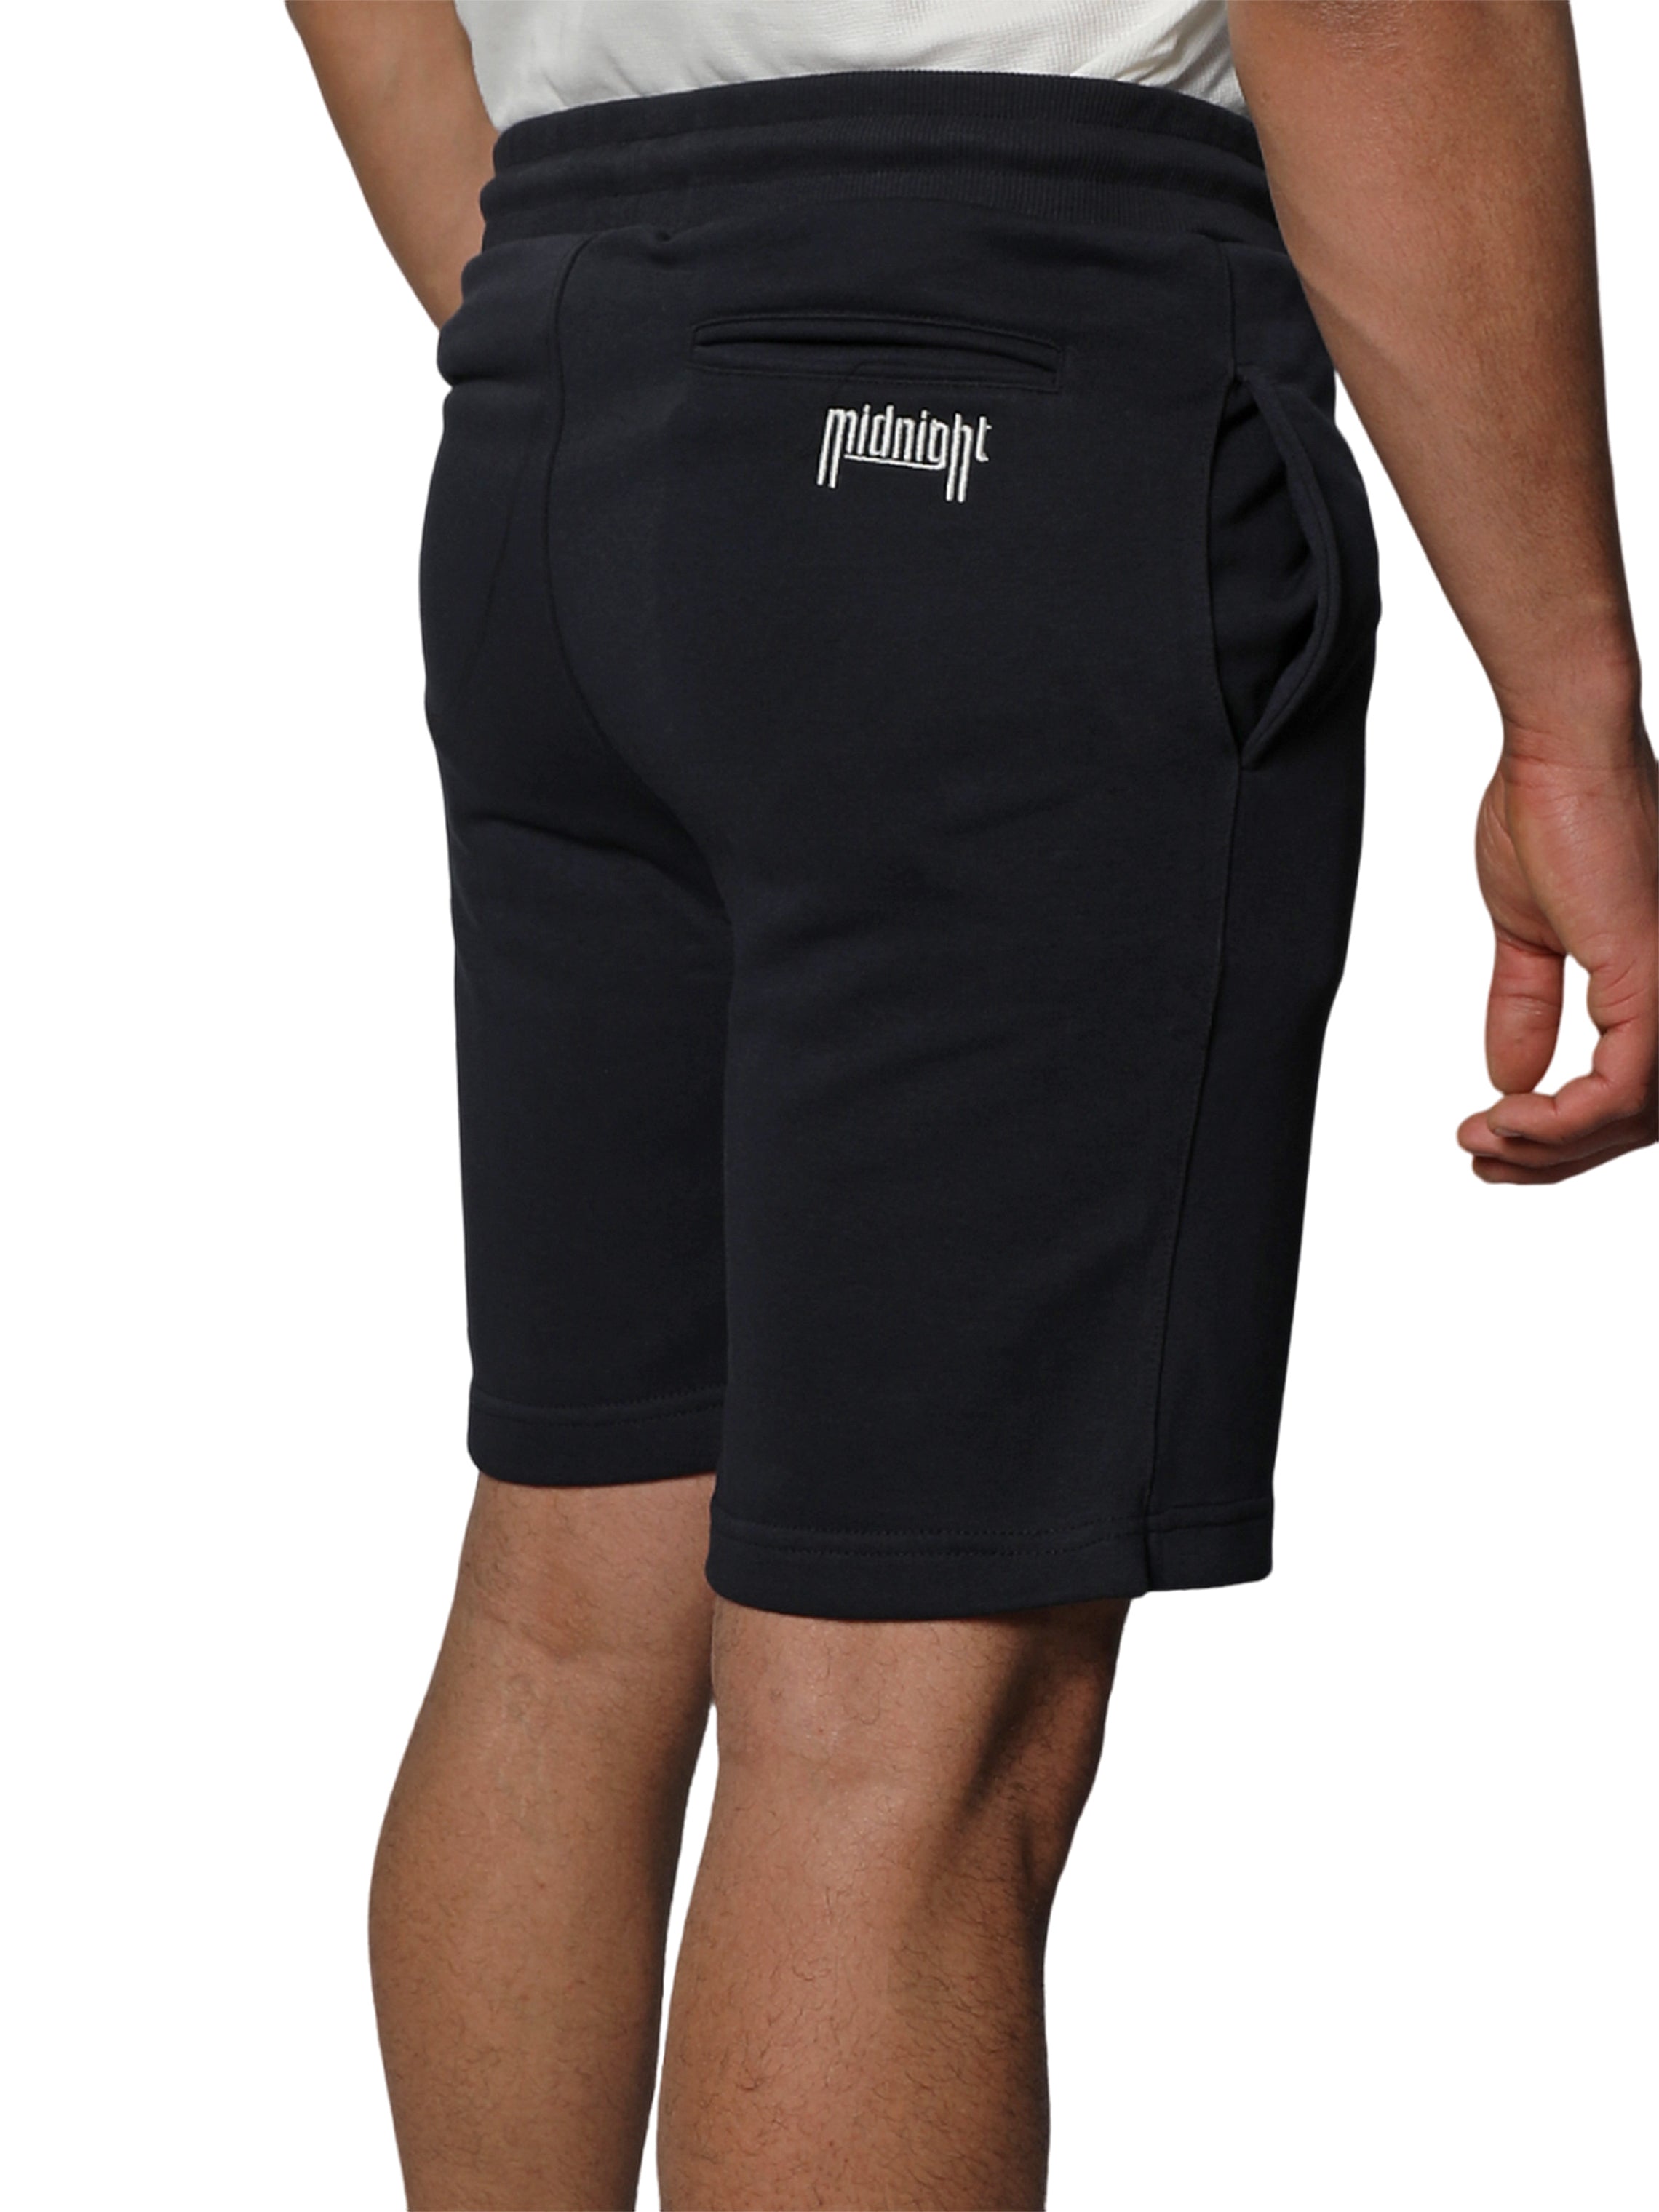 Men Summer Navy Cotton Shorts With Midnight Pocket Design